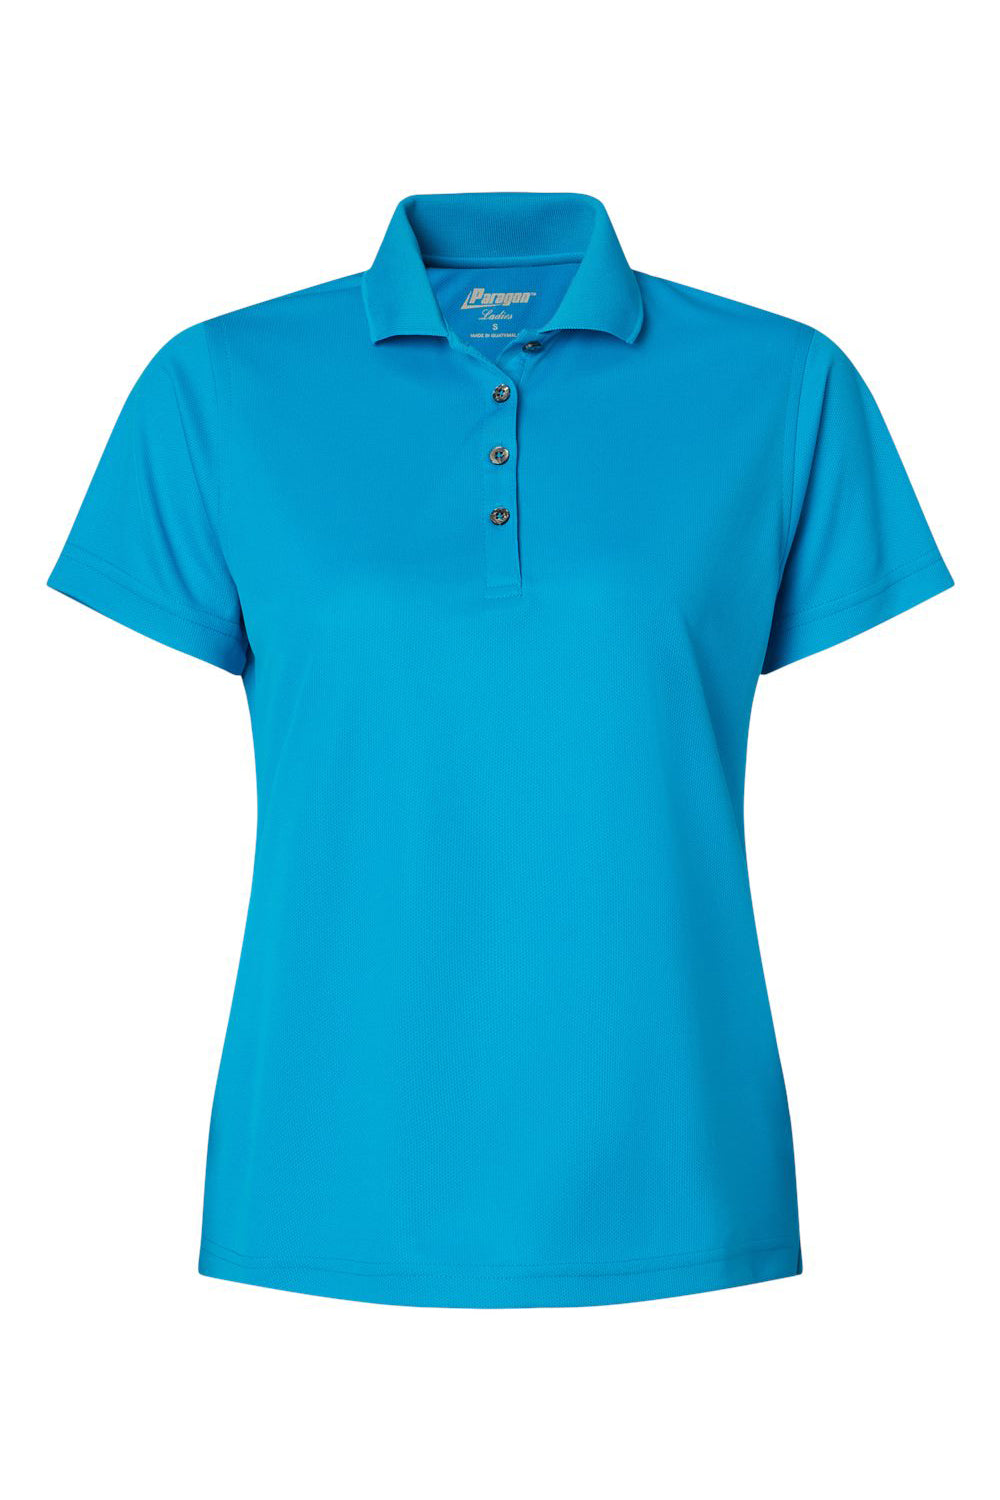 Paragon 104 Womens Saratoga Performance Mini Mesh Short Sleeve Polo Shirt Turquoise Blue Flat Front